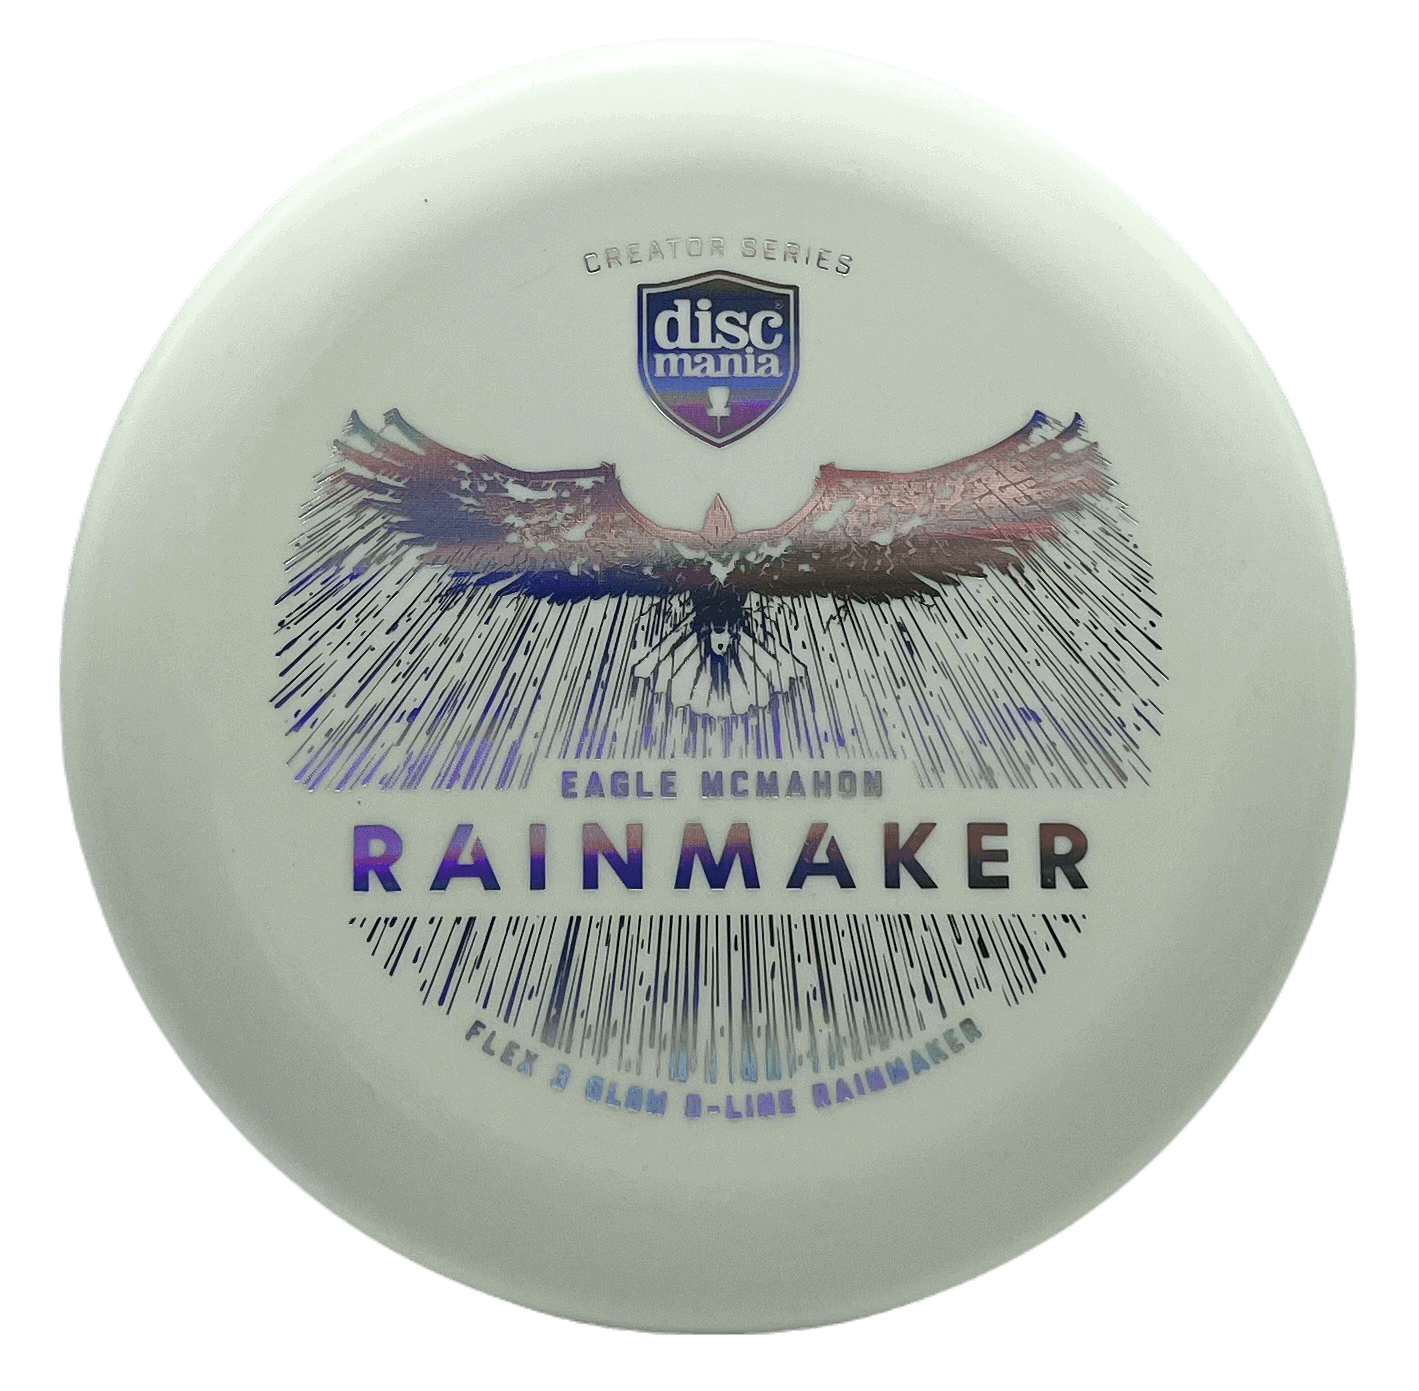 D-Line Rainmaker